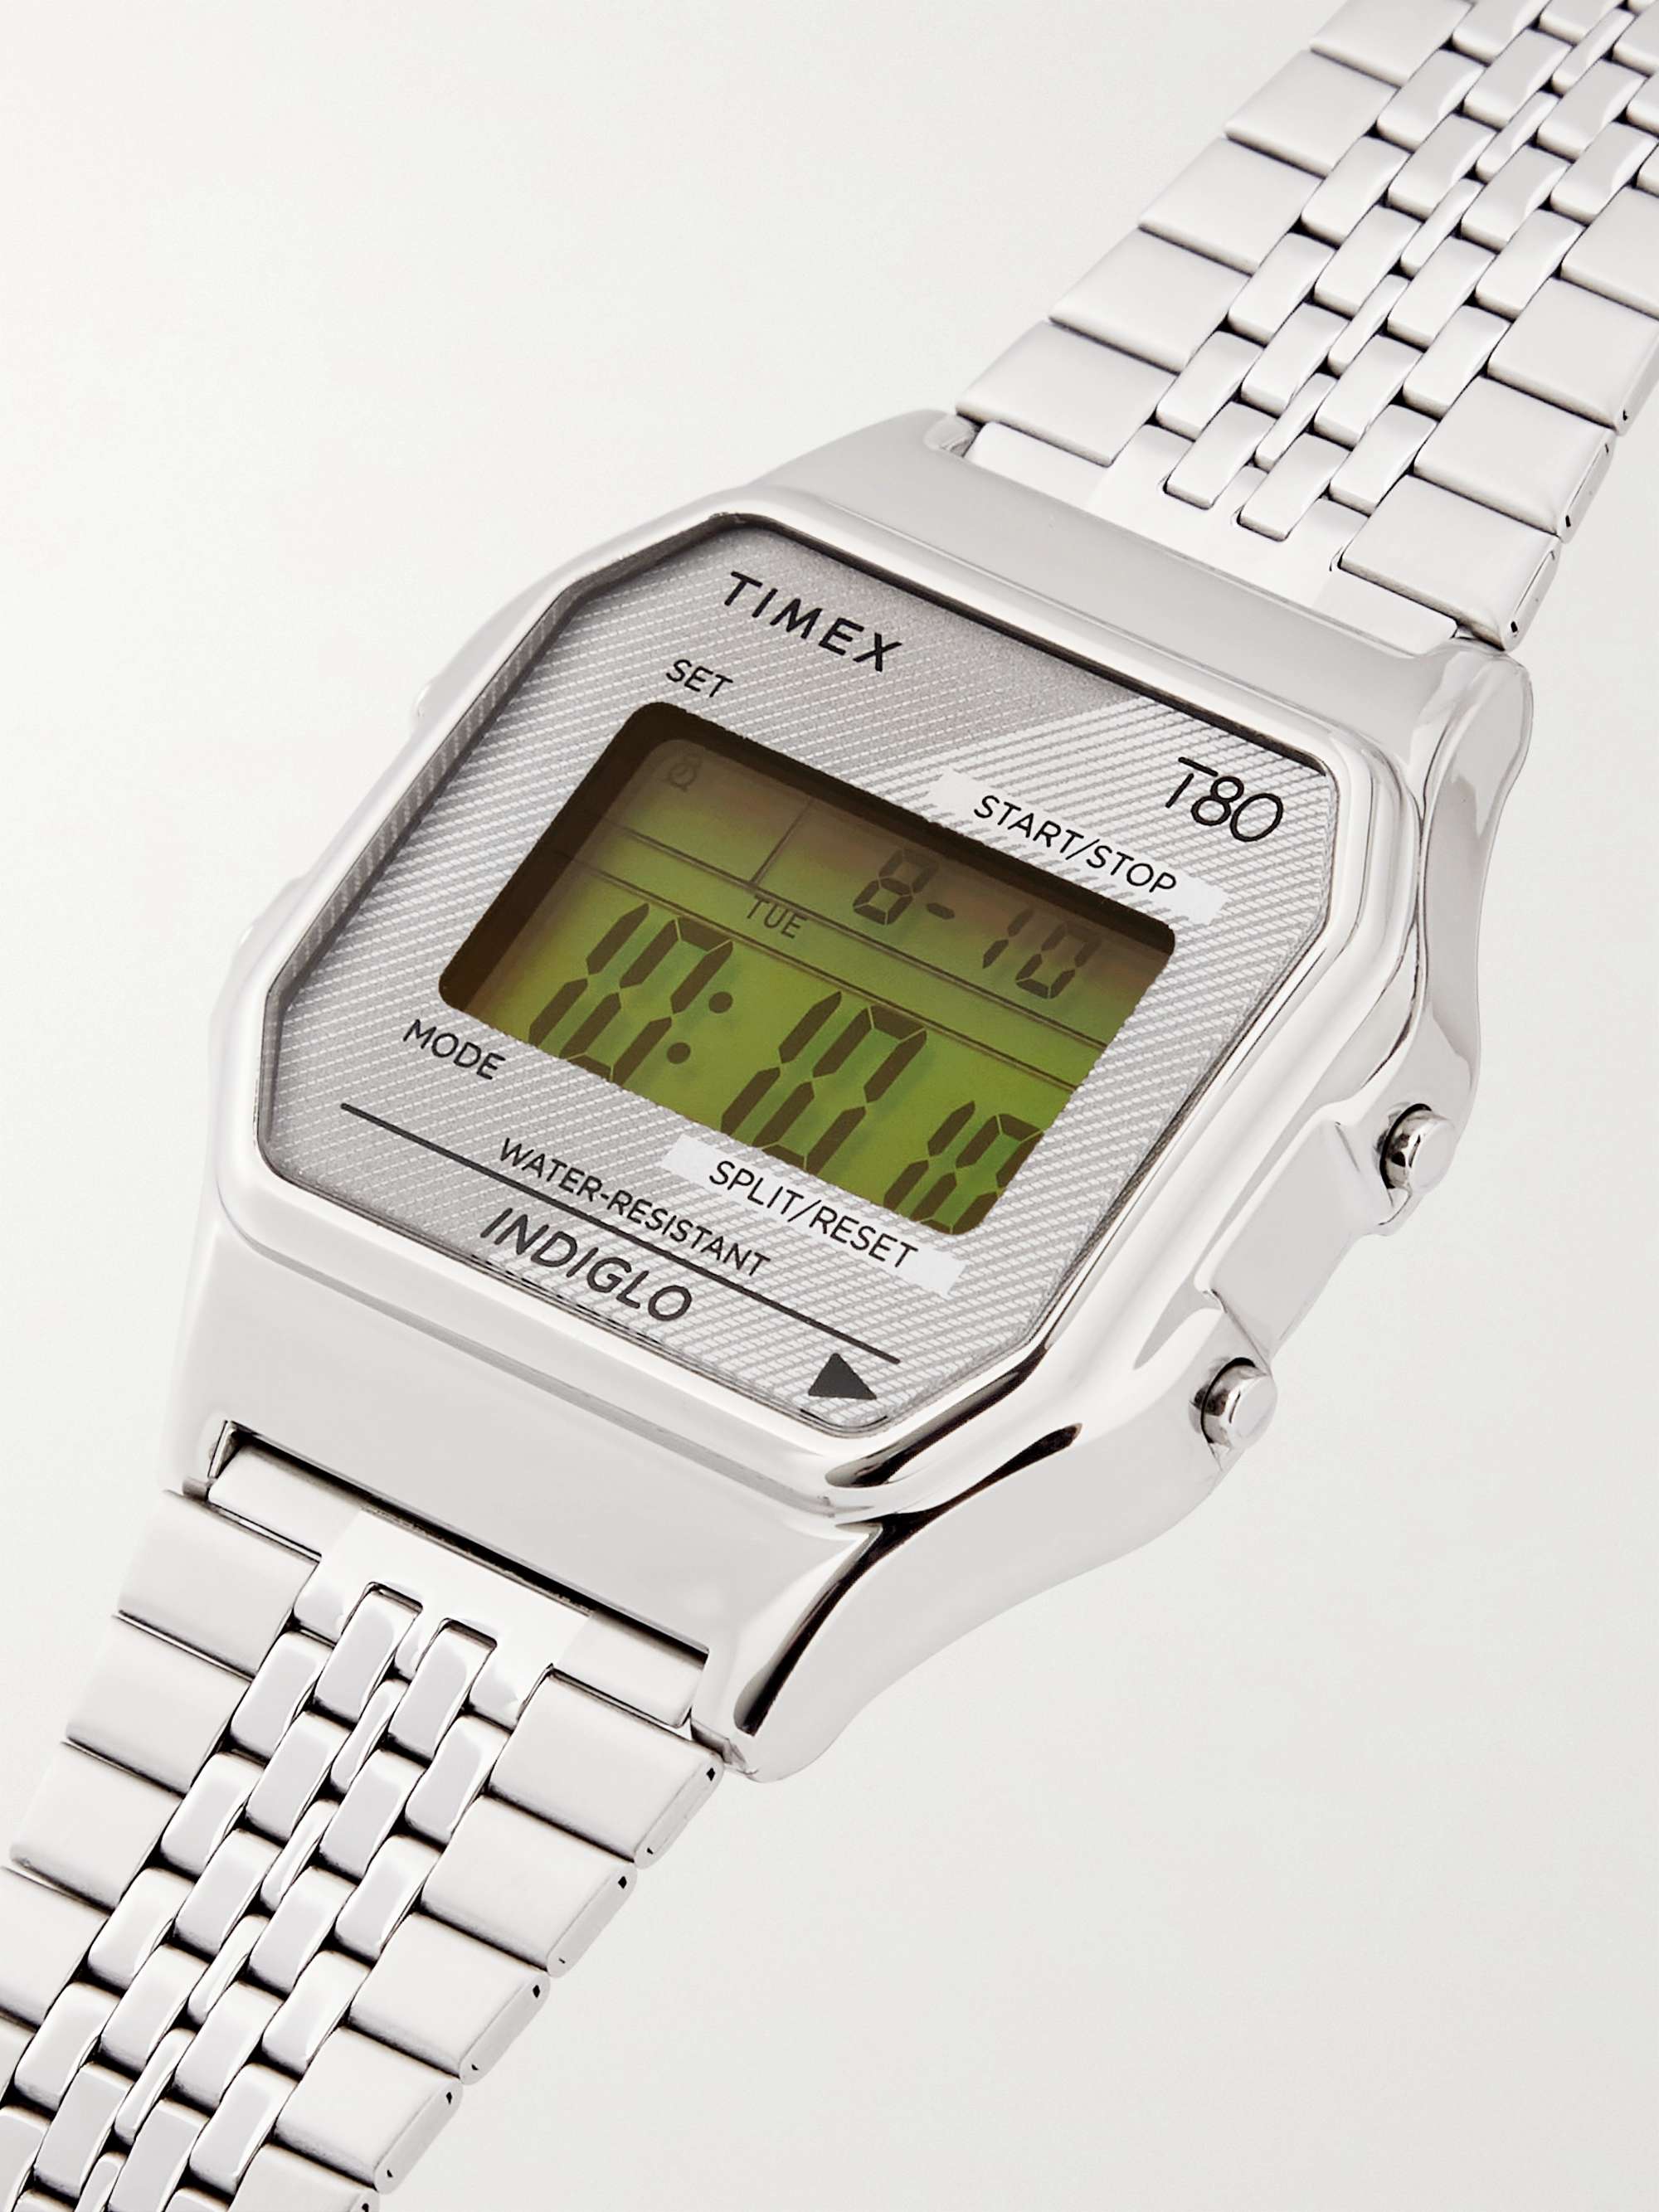 TIMEX T80 34mm Stainless Steel Digital Watch